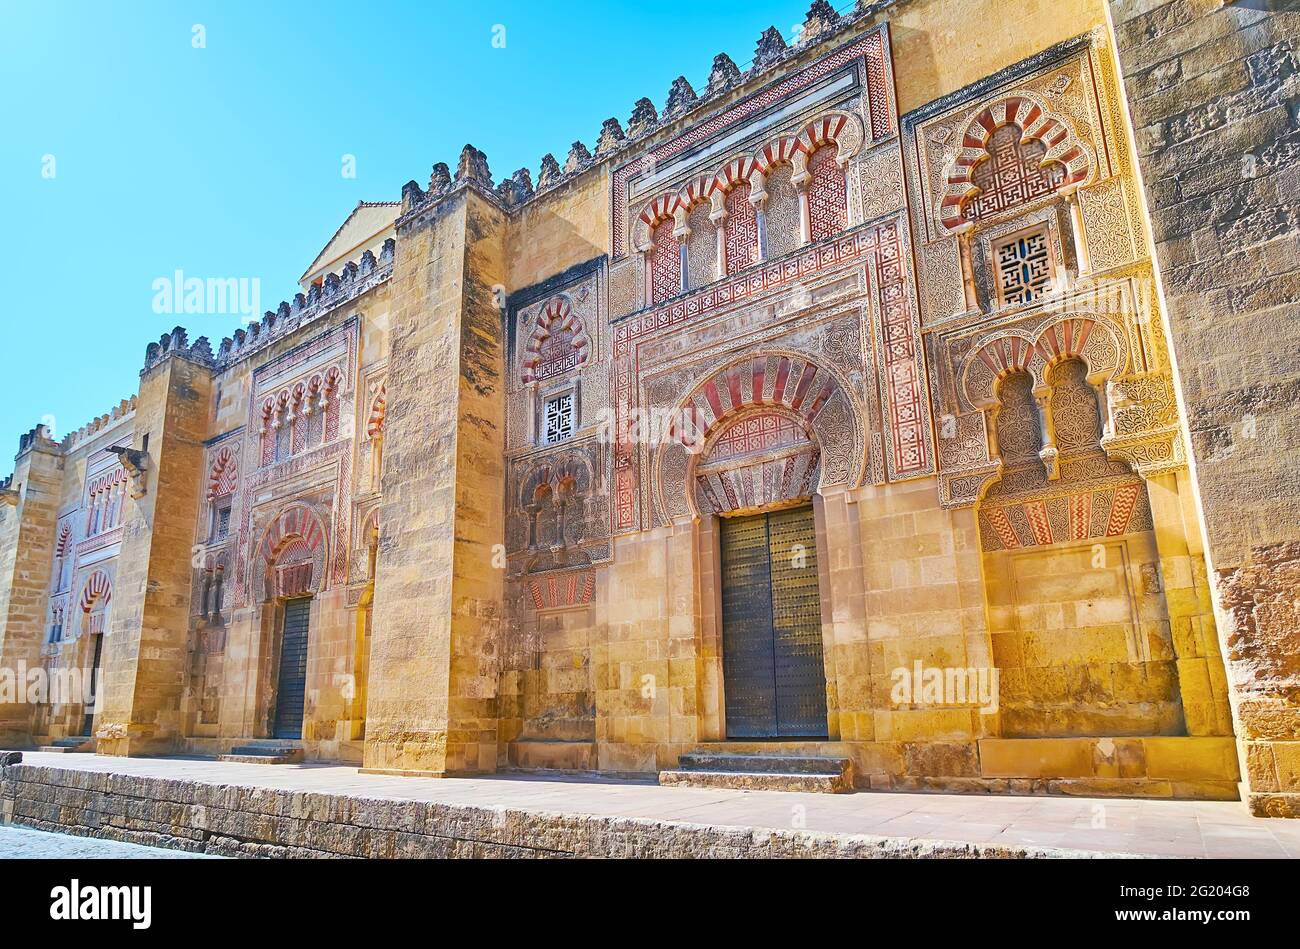 The massive outer wall of Mezquita with preserved medieval gates: Puerta de San Jose, Puerta de la Concepcion Antigua, Puerta de San Nicolas, richly d Stock Photo